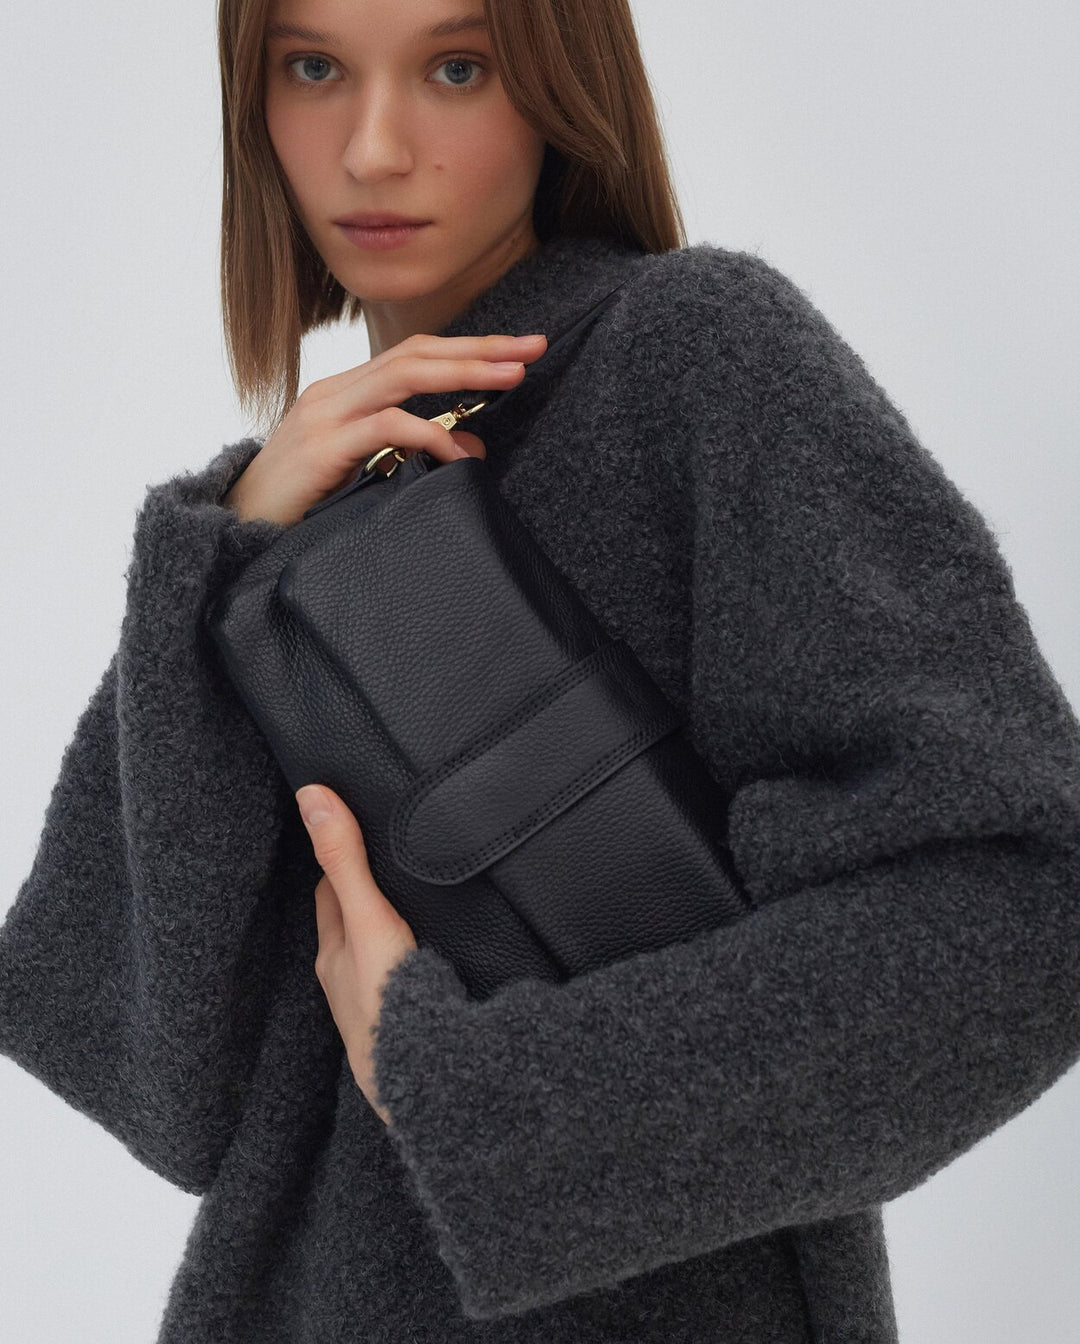 Women's elegant, small handbag in black Estro - fully-styled bag.